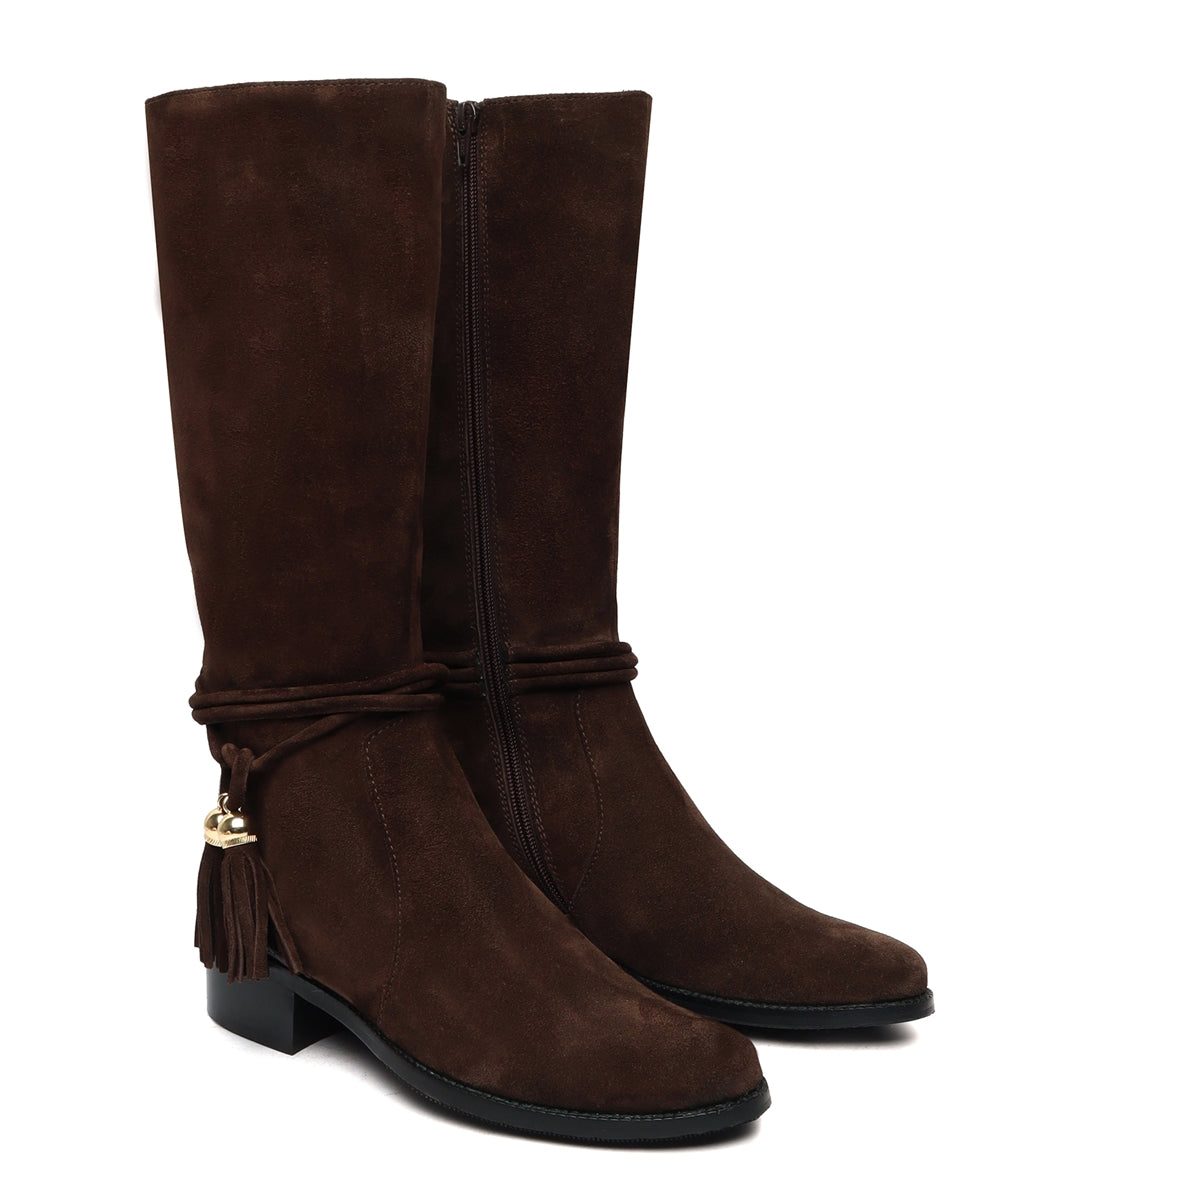 Tassel Dark Brown Suede Leather With Side Zip High Ankle Ladies Boots By Brune & Bareskin